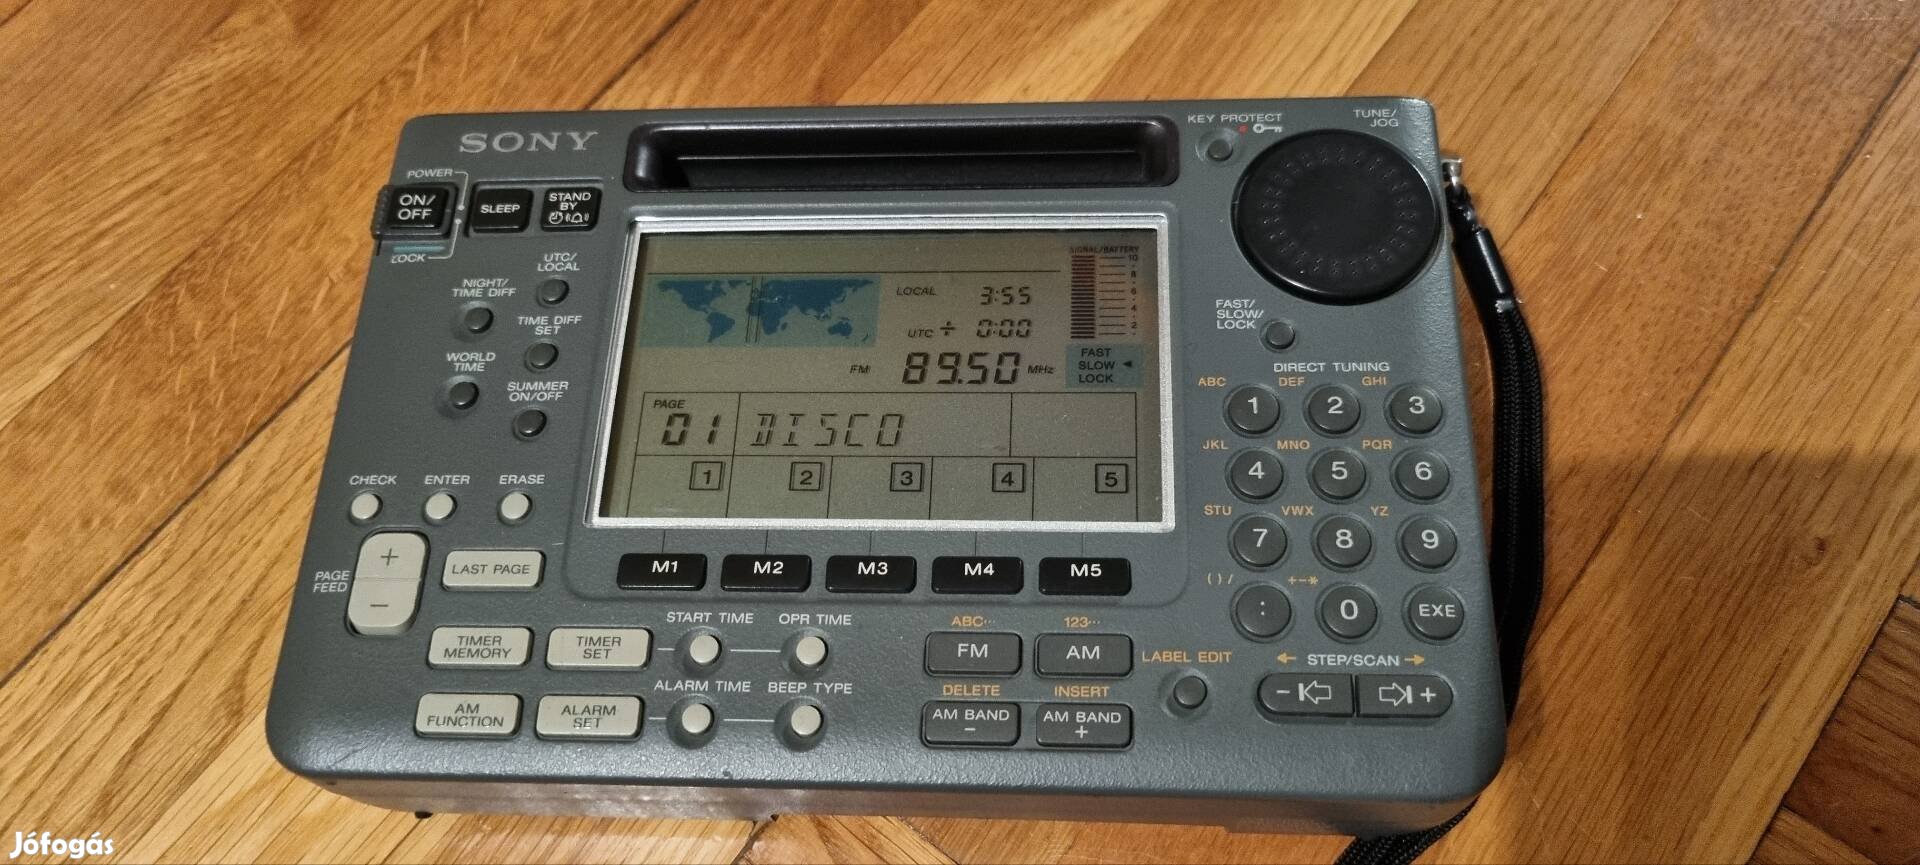 Sony ICF-SW55 világvevő rádió 